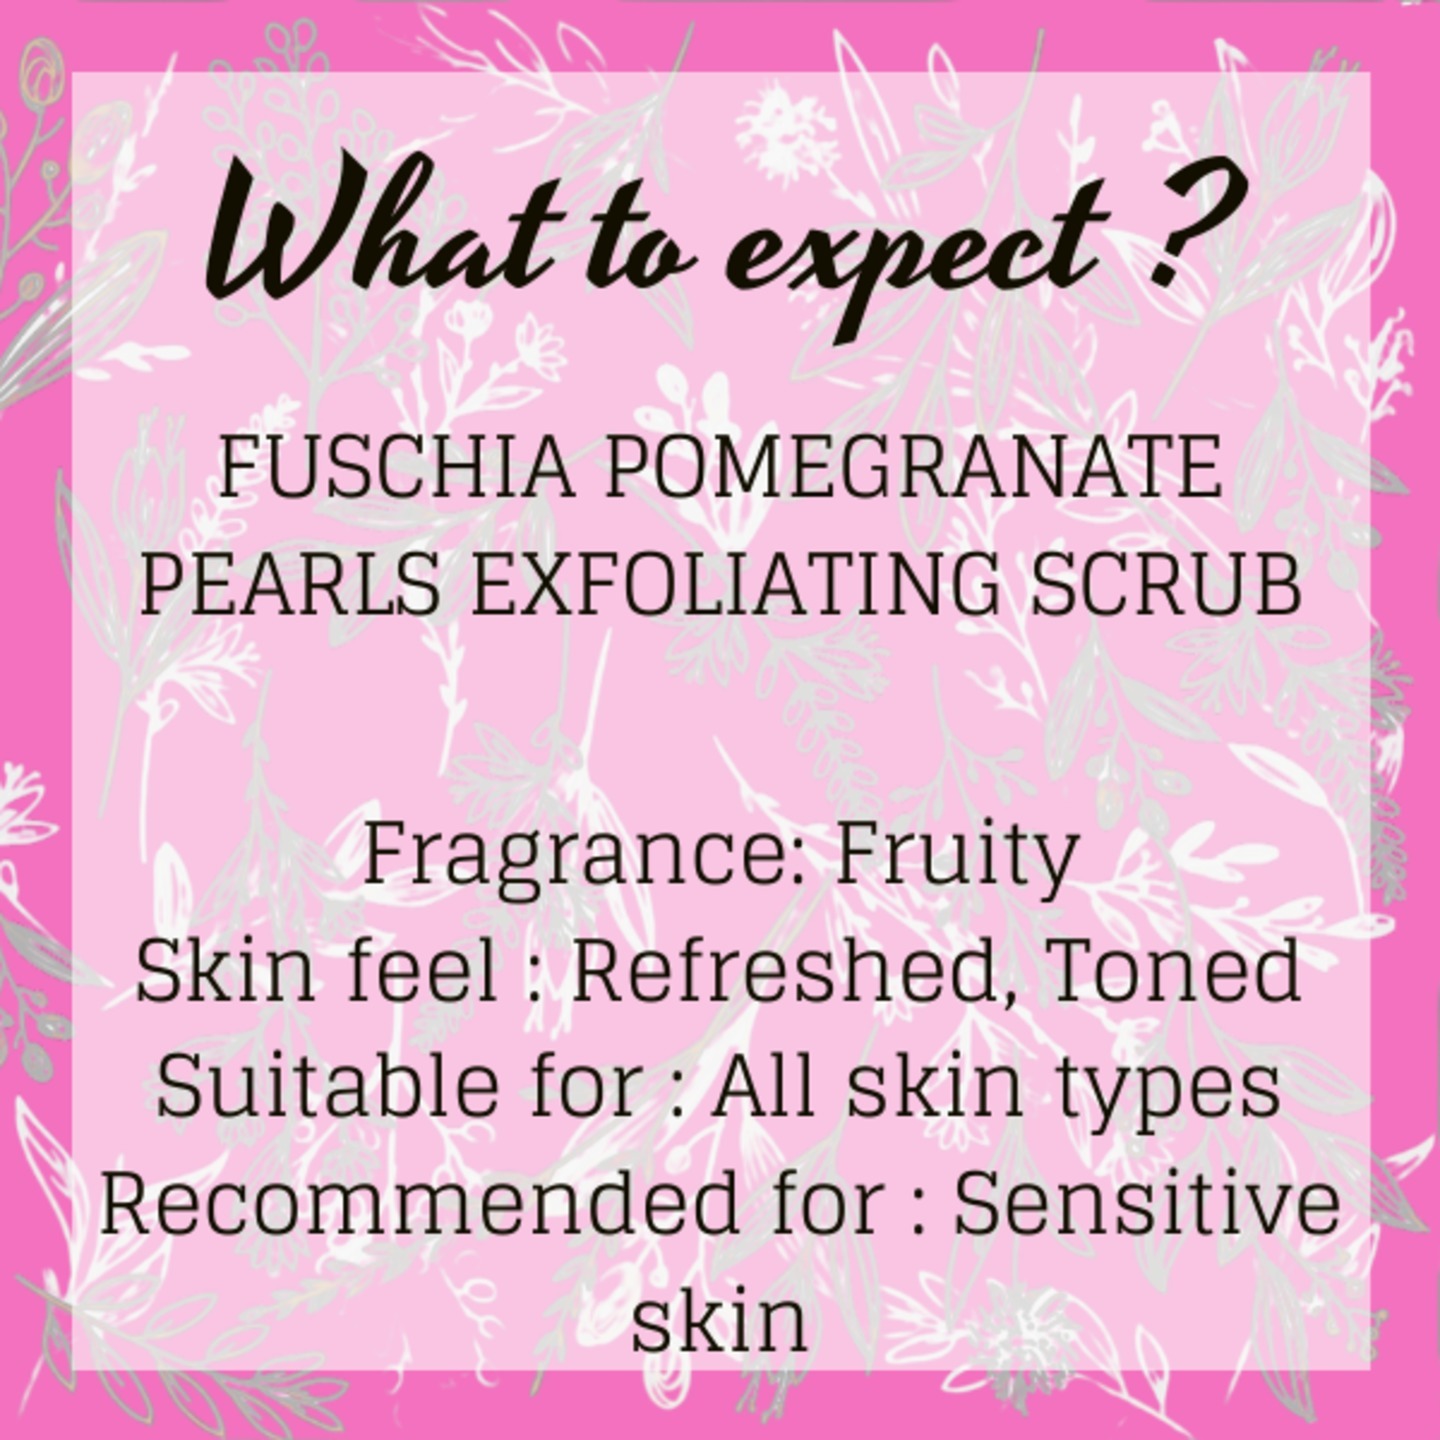 Fuschia - Pomegranate Pearls - Face & Body Exfoliating Scrub - 100g